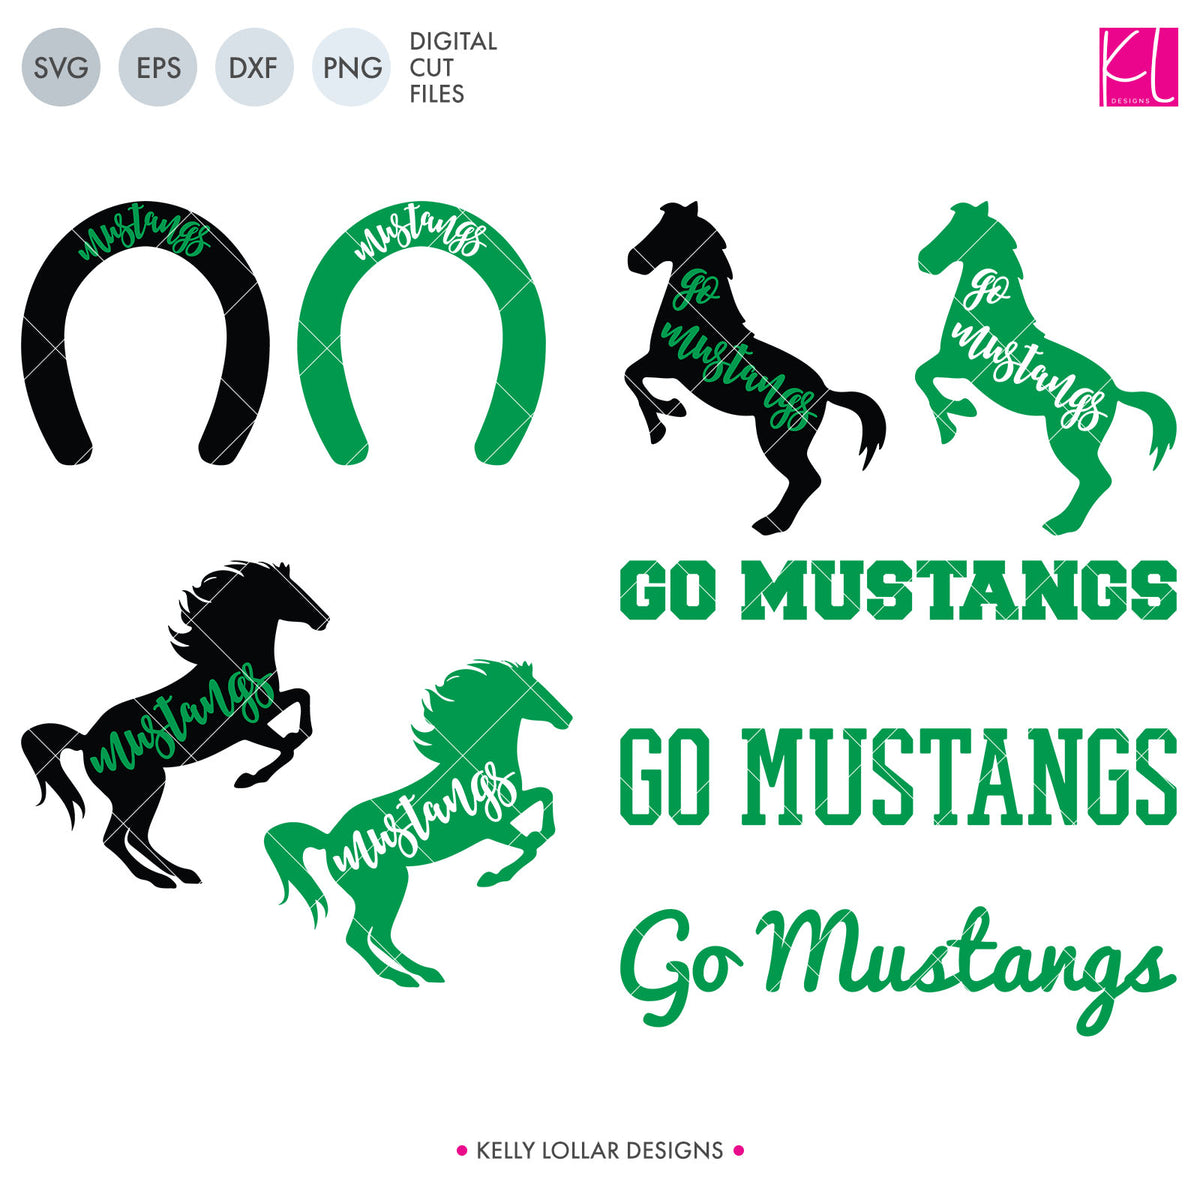 Mustangs Mascot Bundle | SVG DXF EPS PNG Cut Files